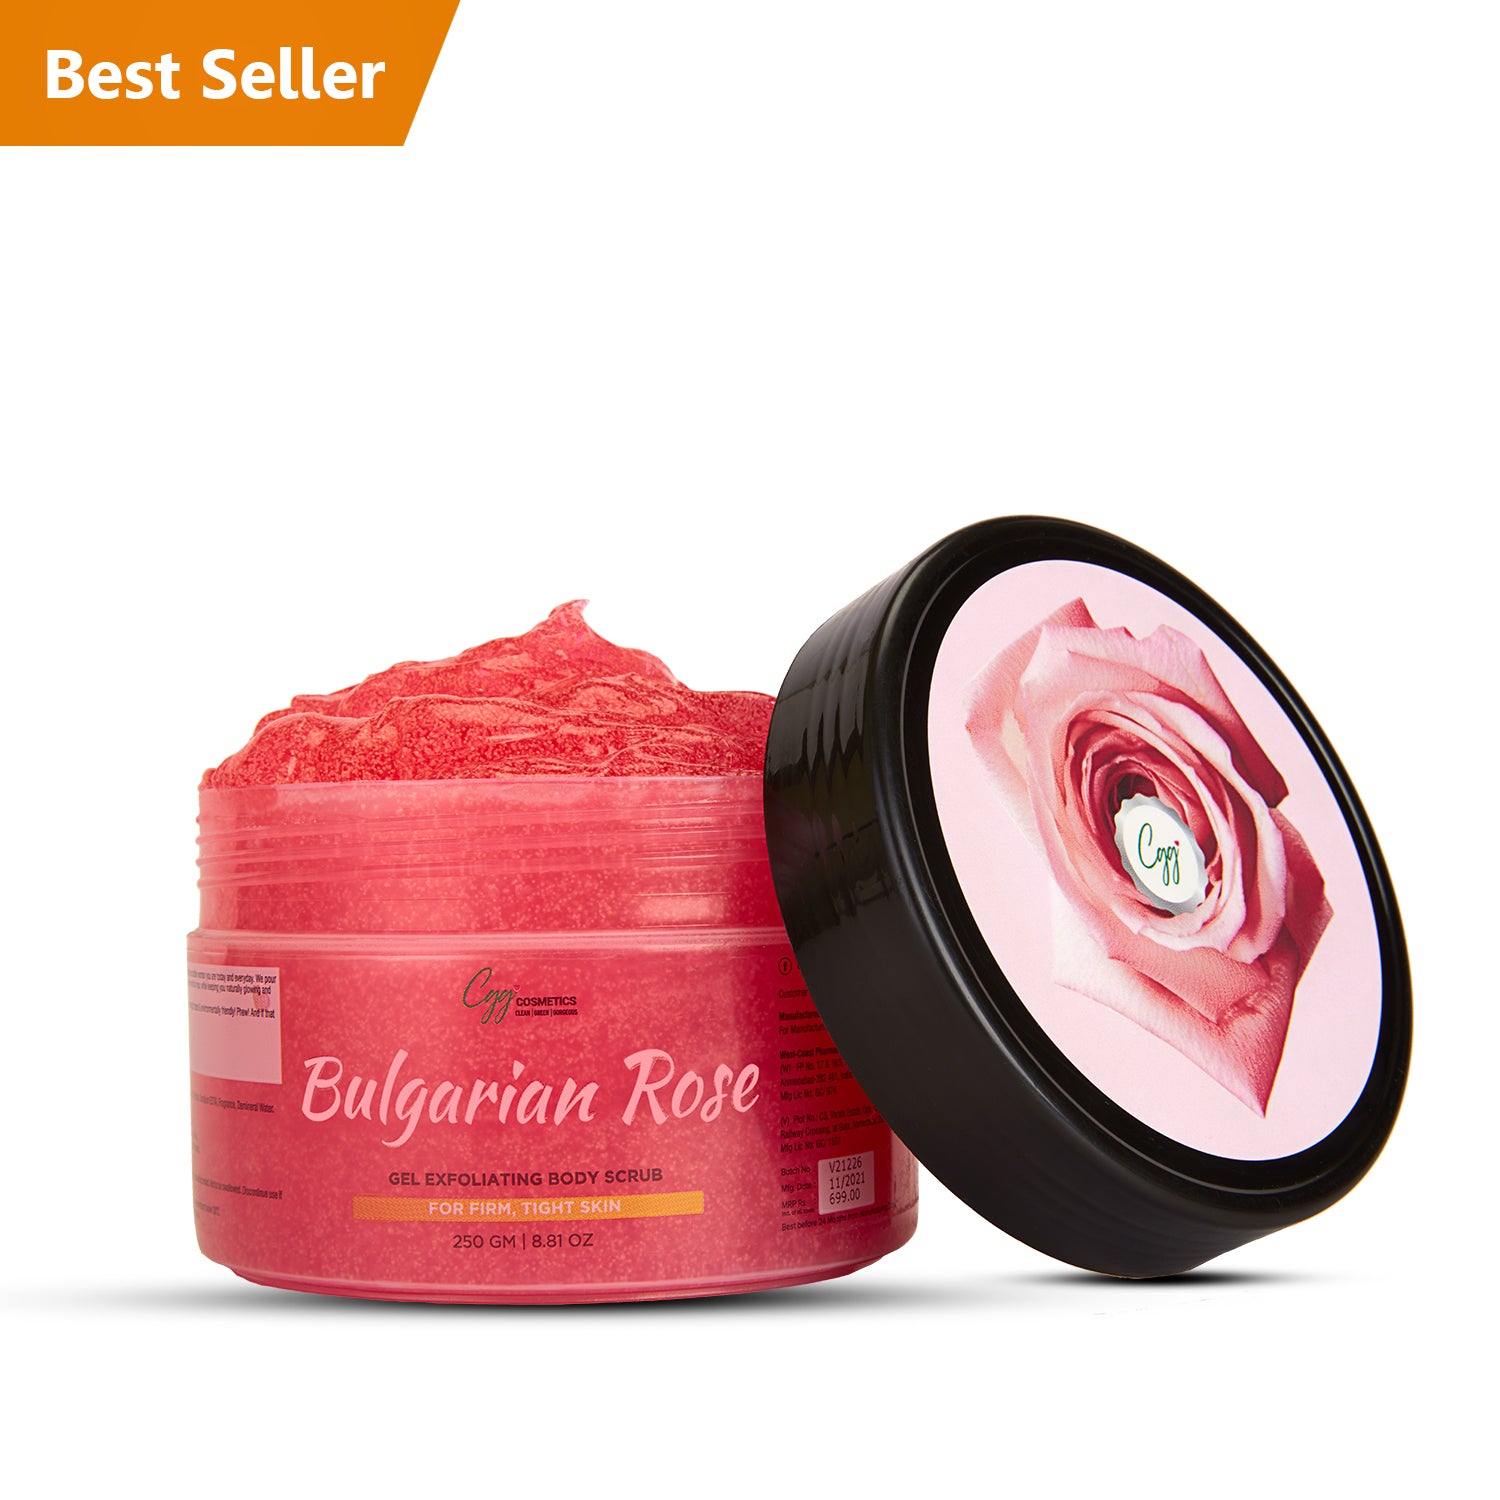 CGG Cosmetics Bulgarian Rose Gel Exfoliating Body Scrub - Firm, Tight Skin & 100% Natural Rose Water - 250gm